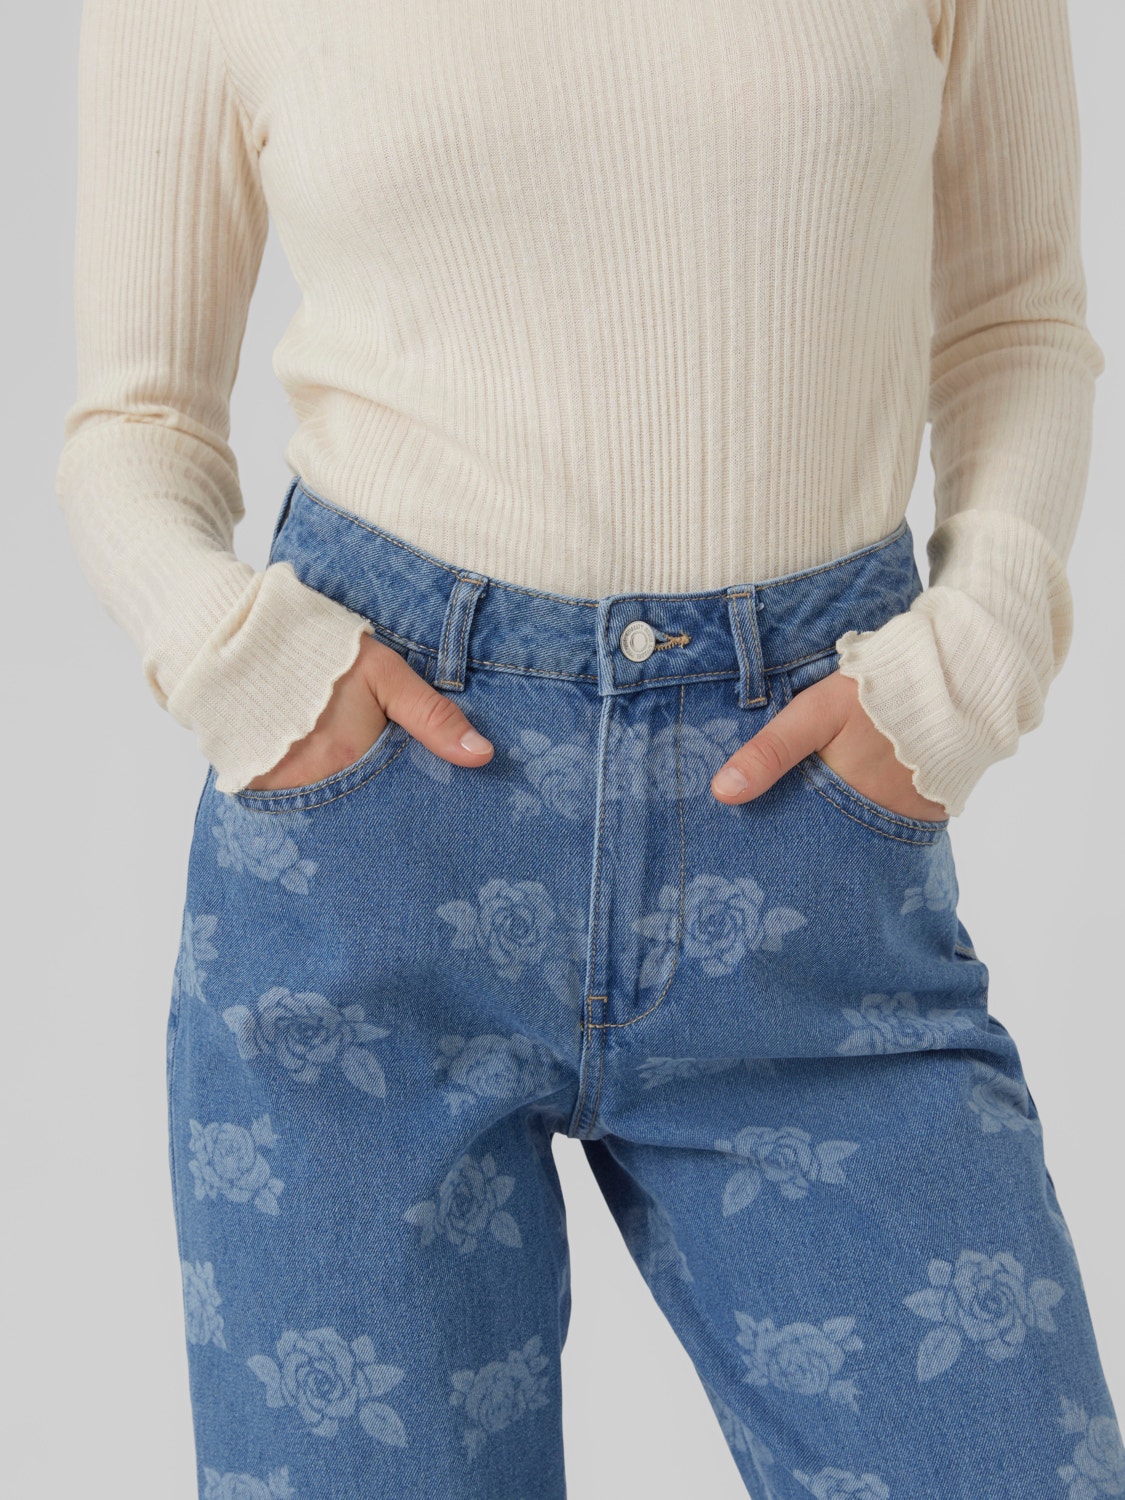 Vero Moda VMLACE High rise Flared Fit Jeans -Medium Blue Denim - 10301997